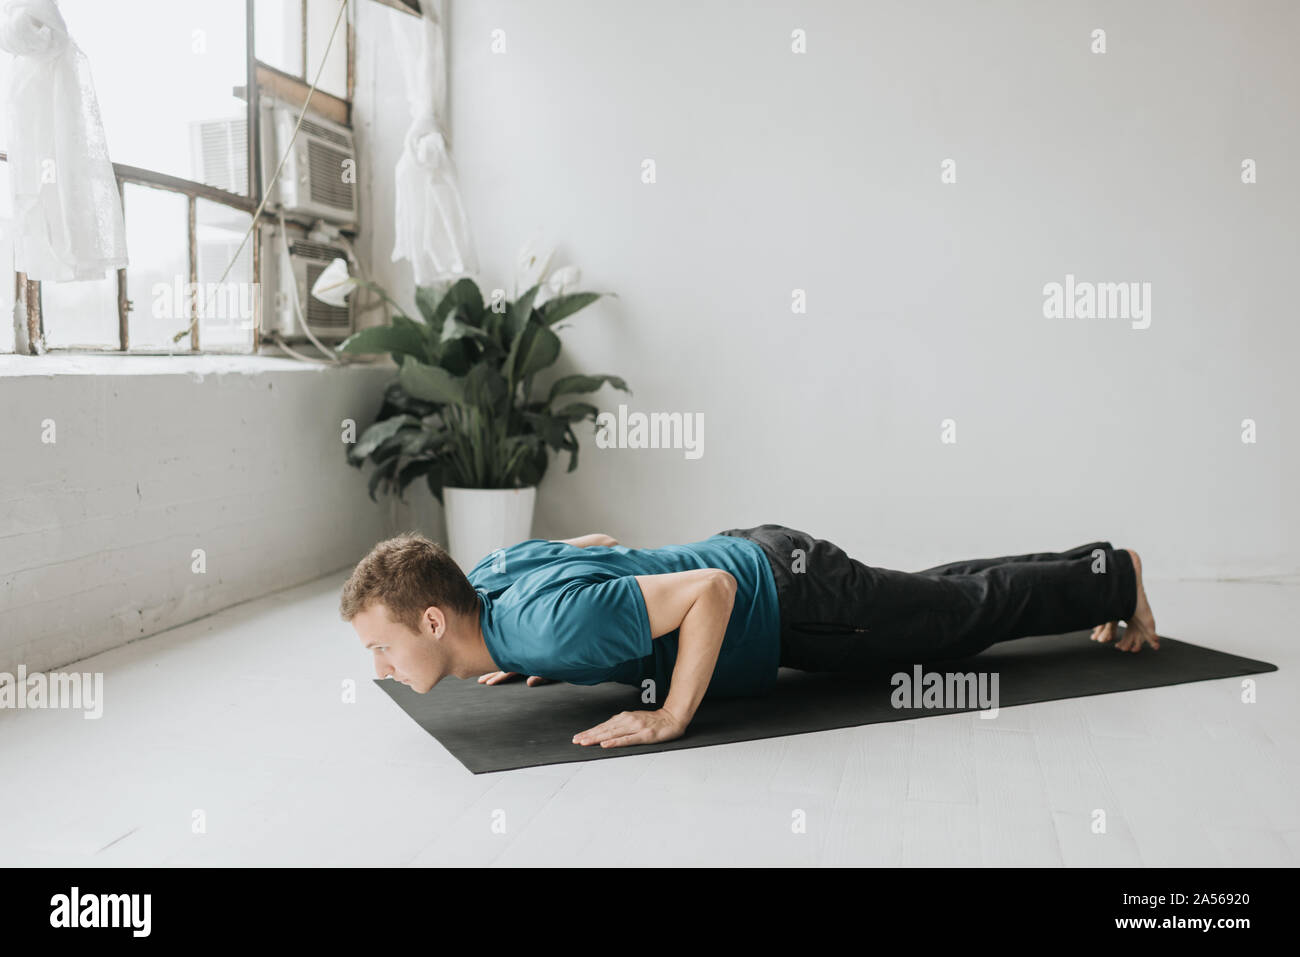 KREA - weird yoga poses for men, studio photo